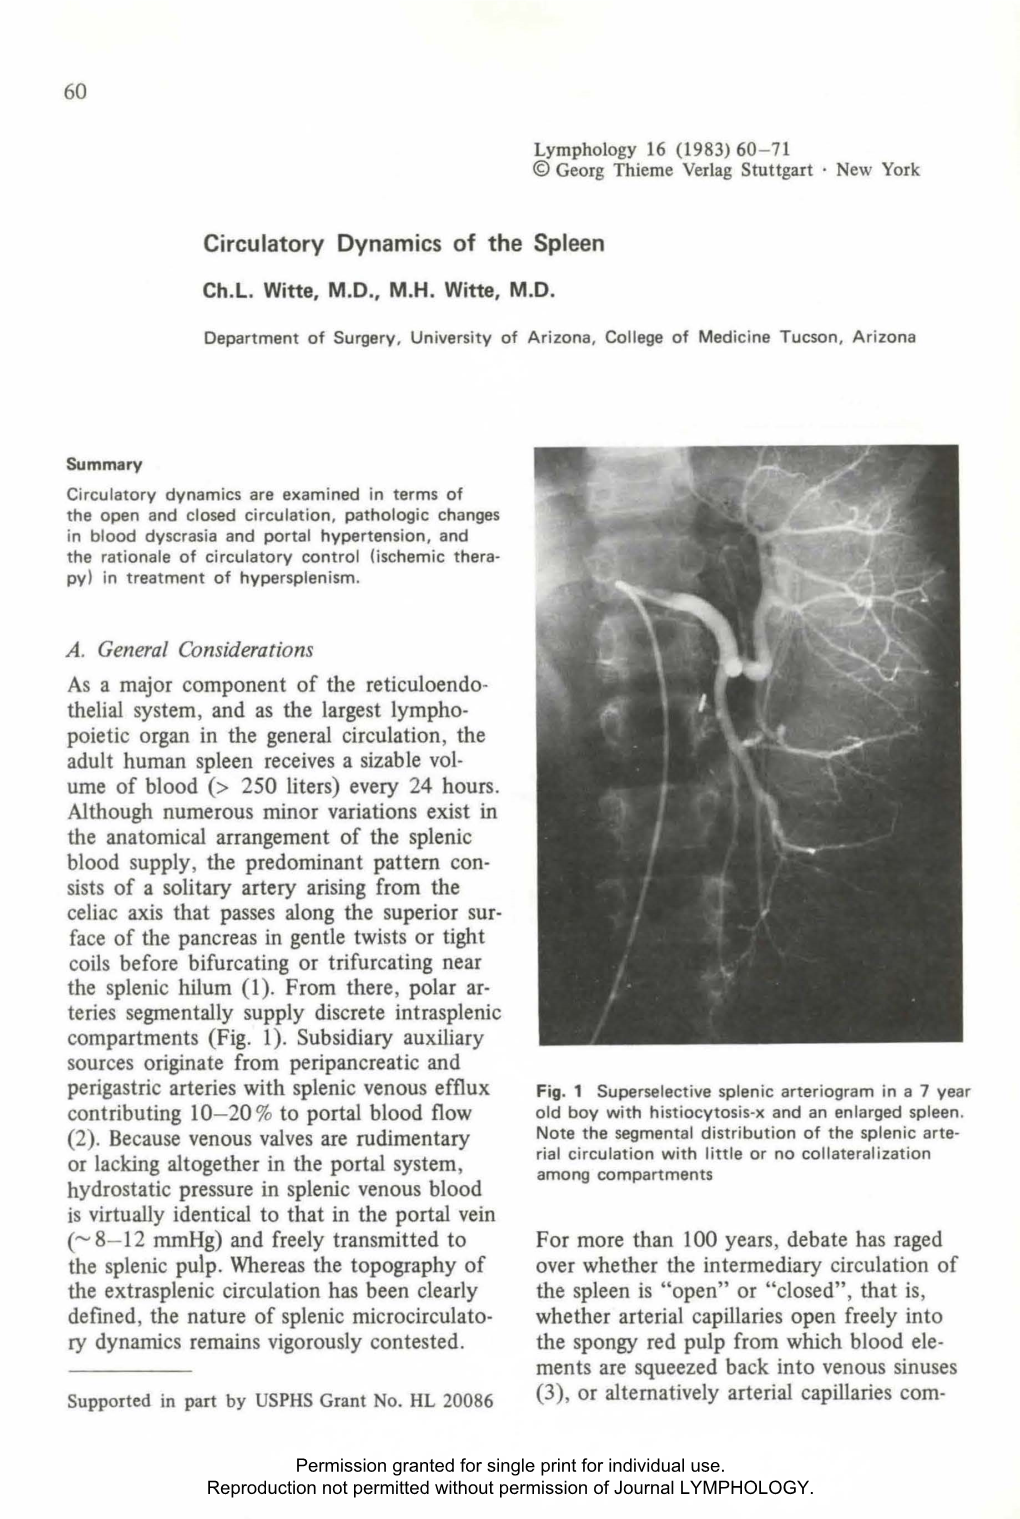 Circulatory Dynamics of the Spleen